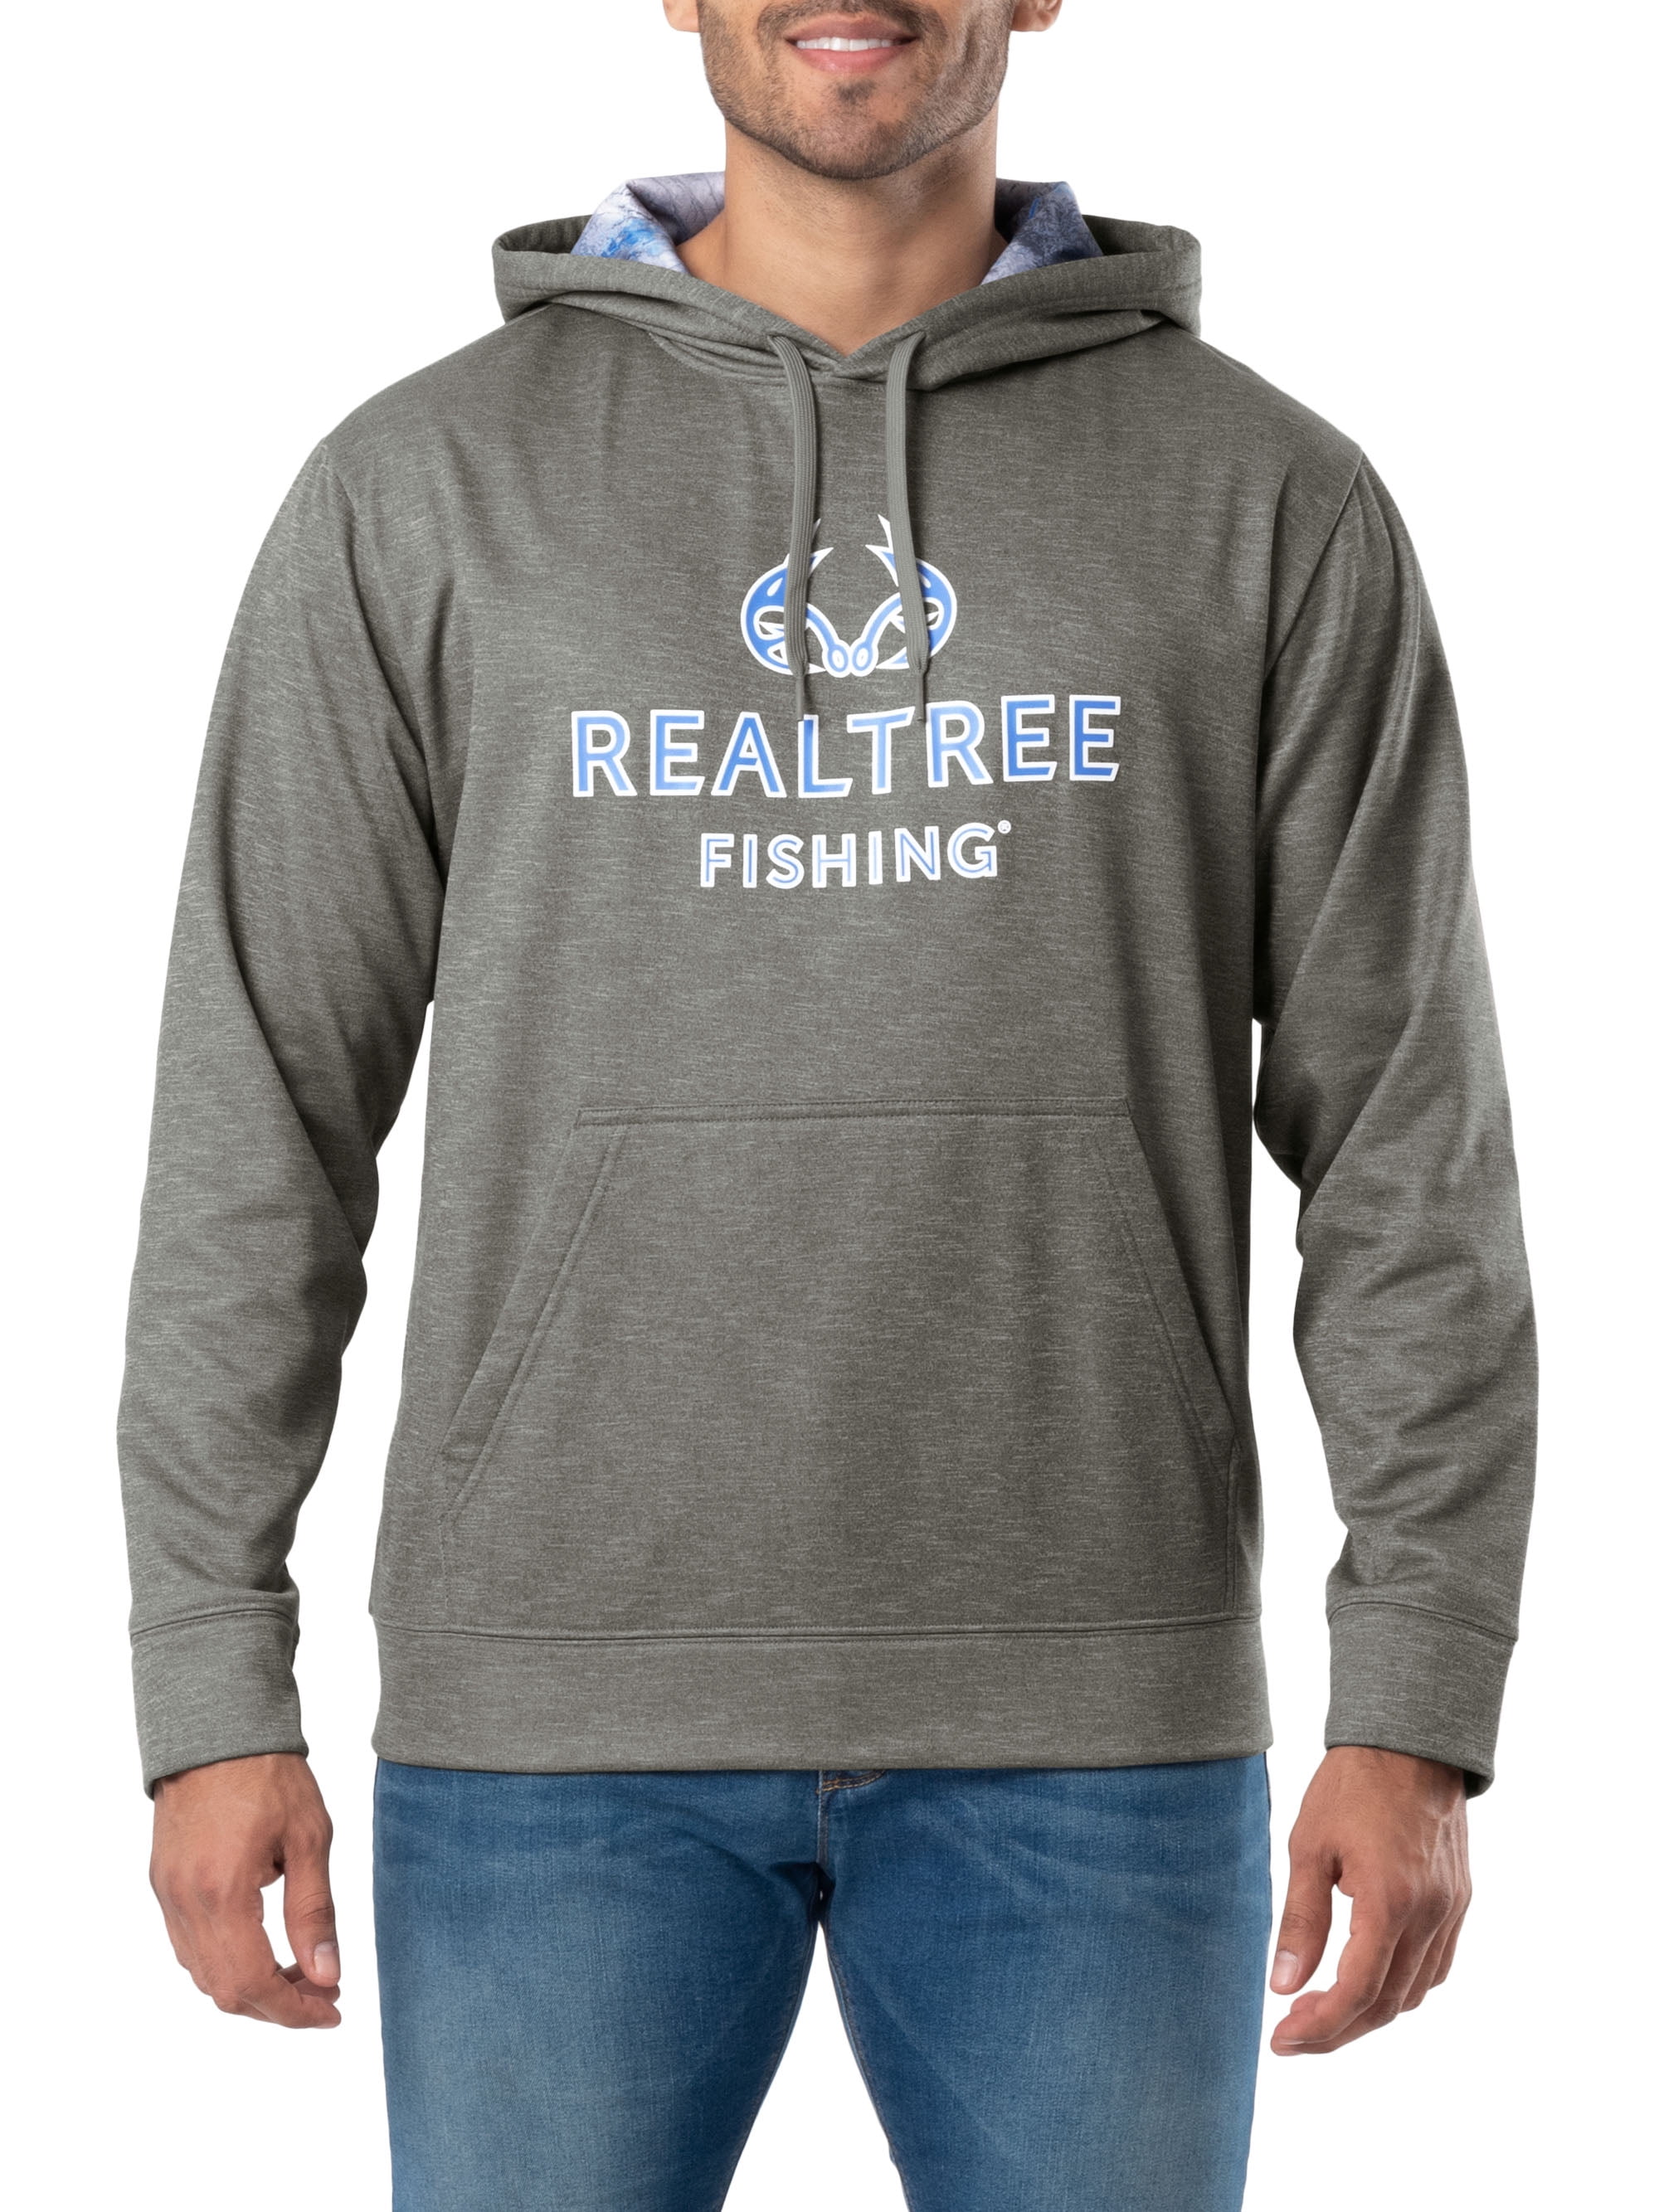 Realtree Fishing Men's Logo Performance Hoodie, Size: 3XL, Gray